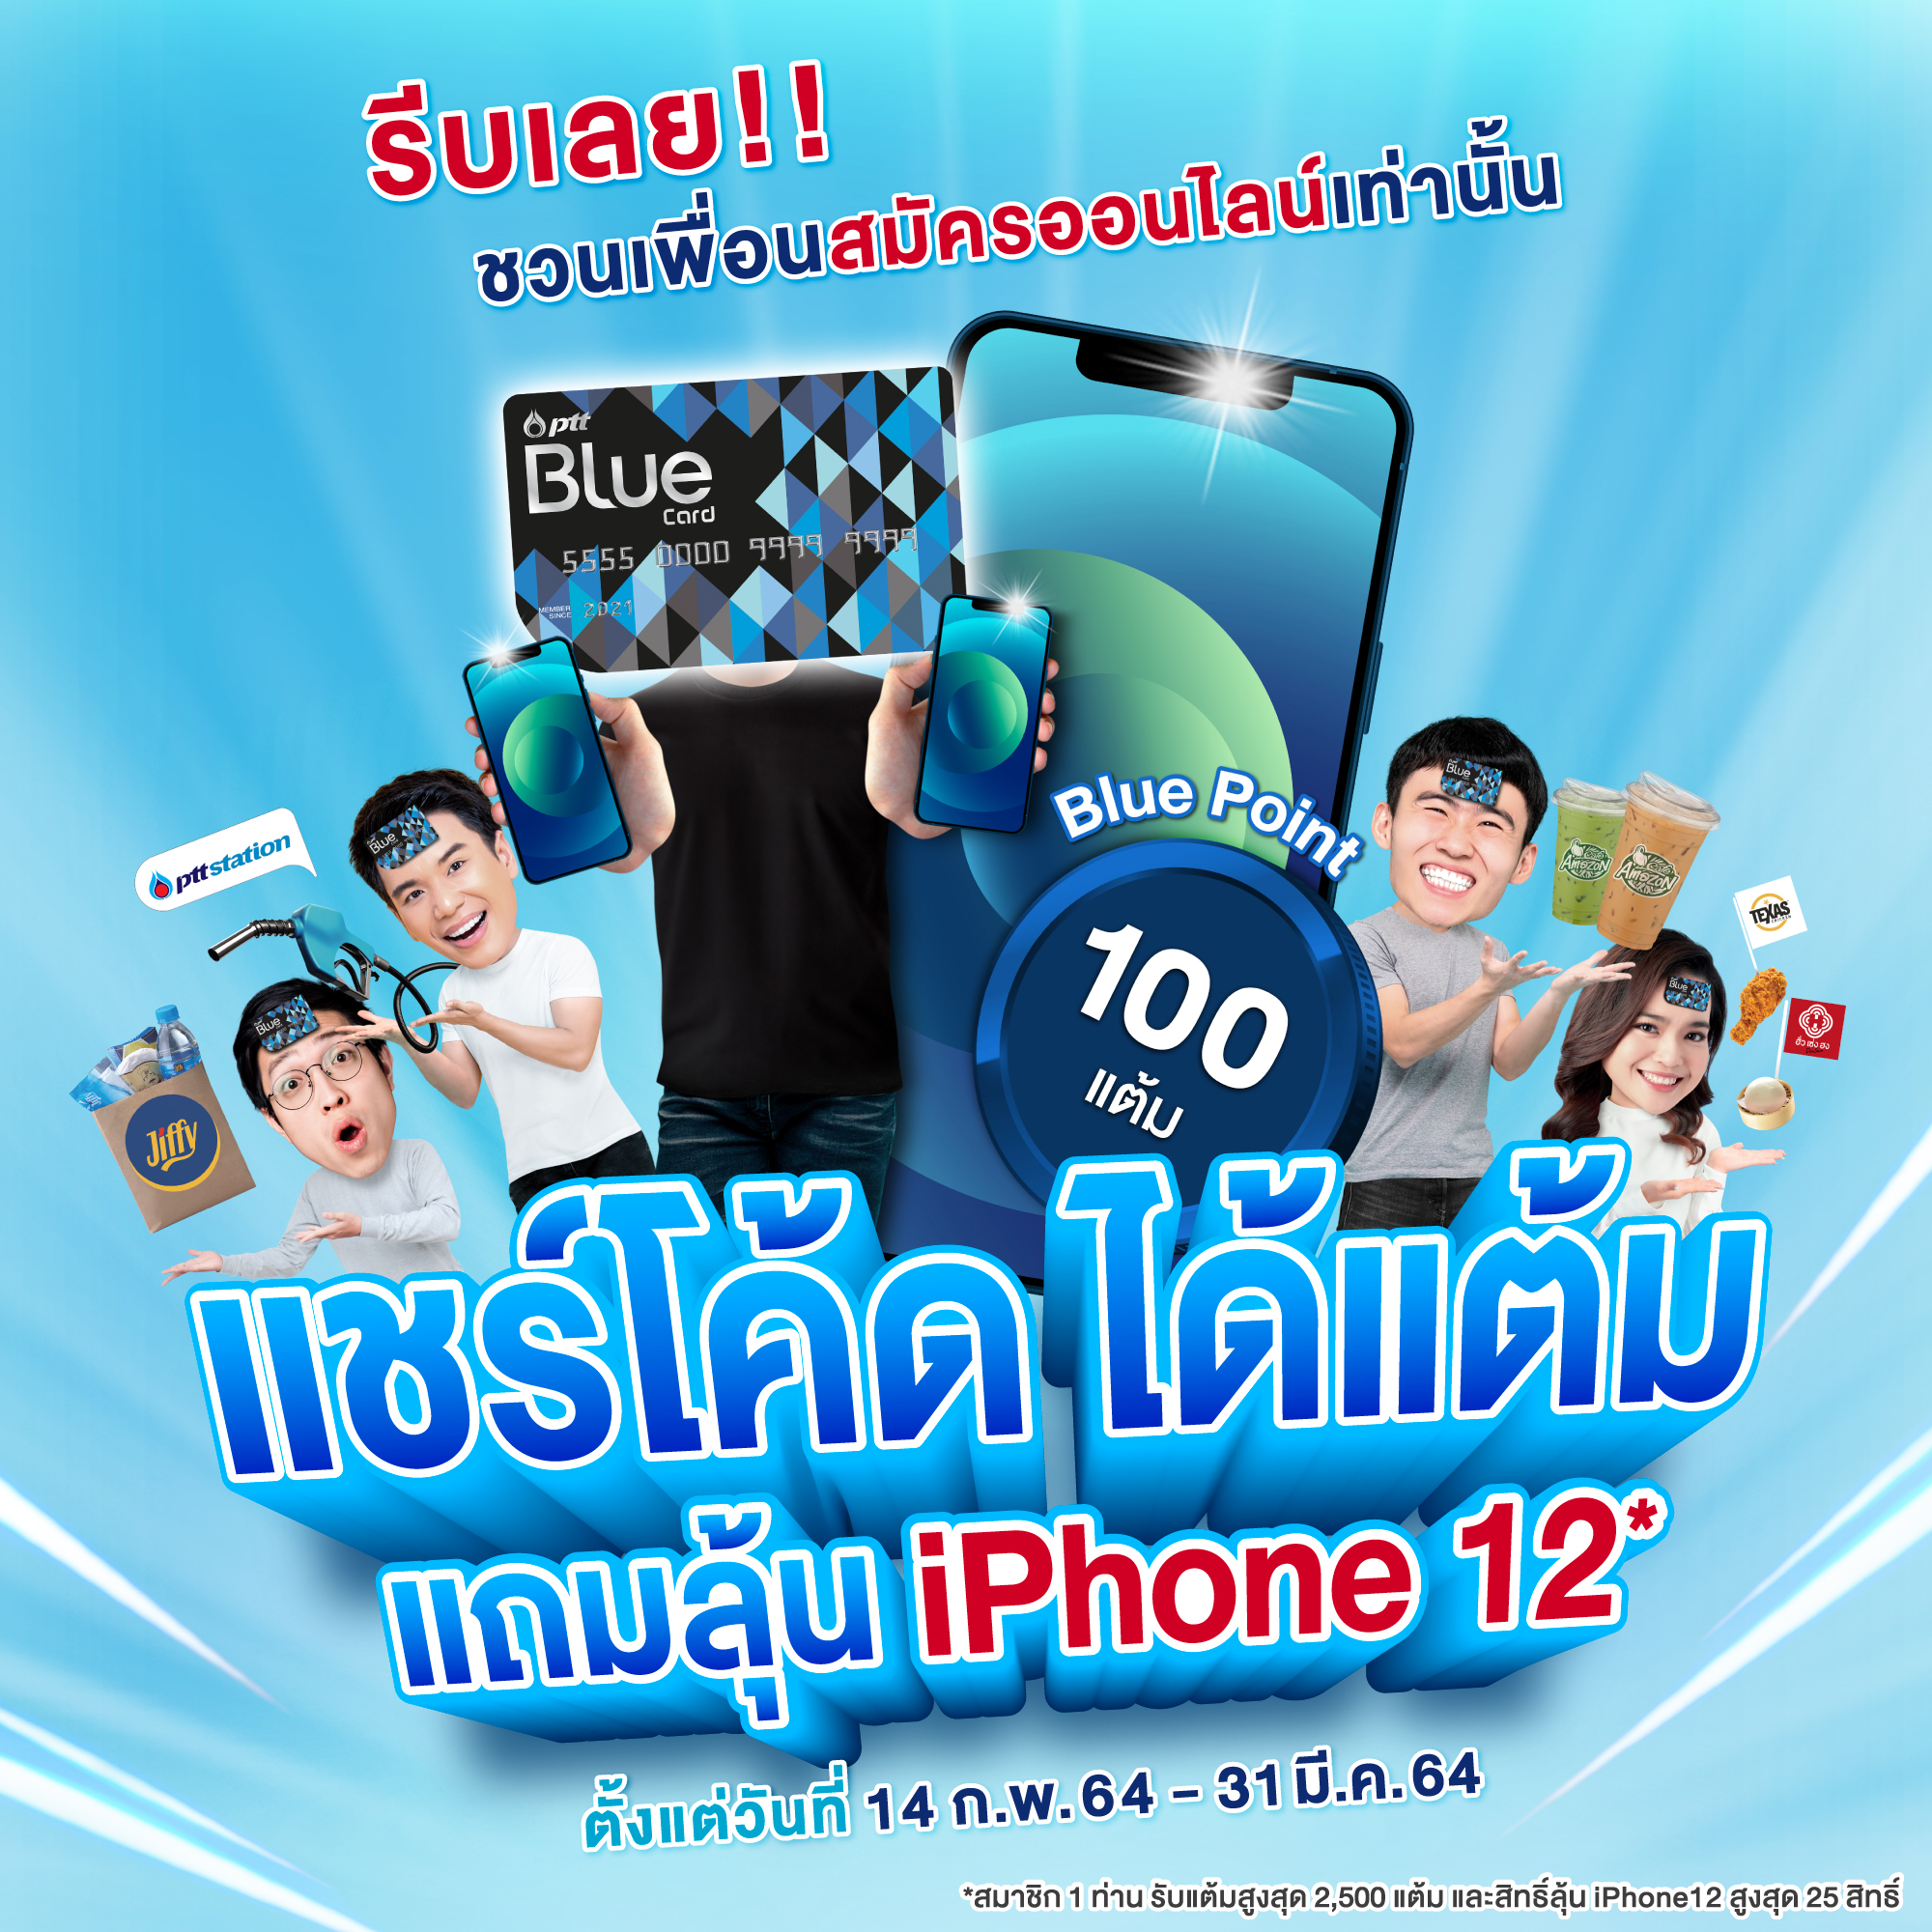 Blue card iPhone 12 PTT ปตท